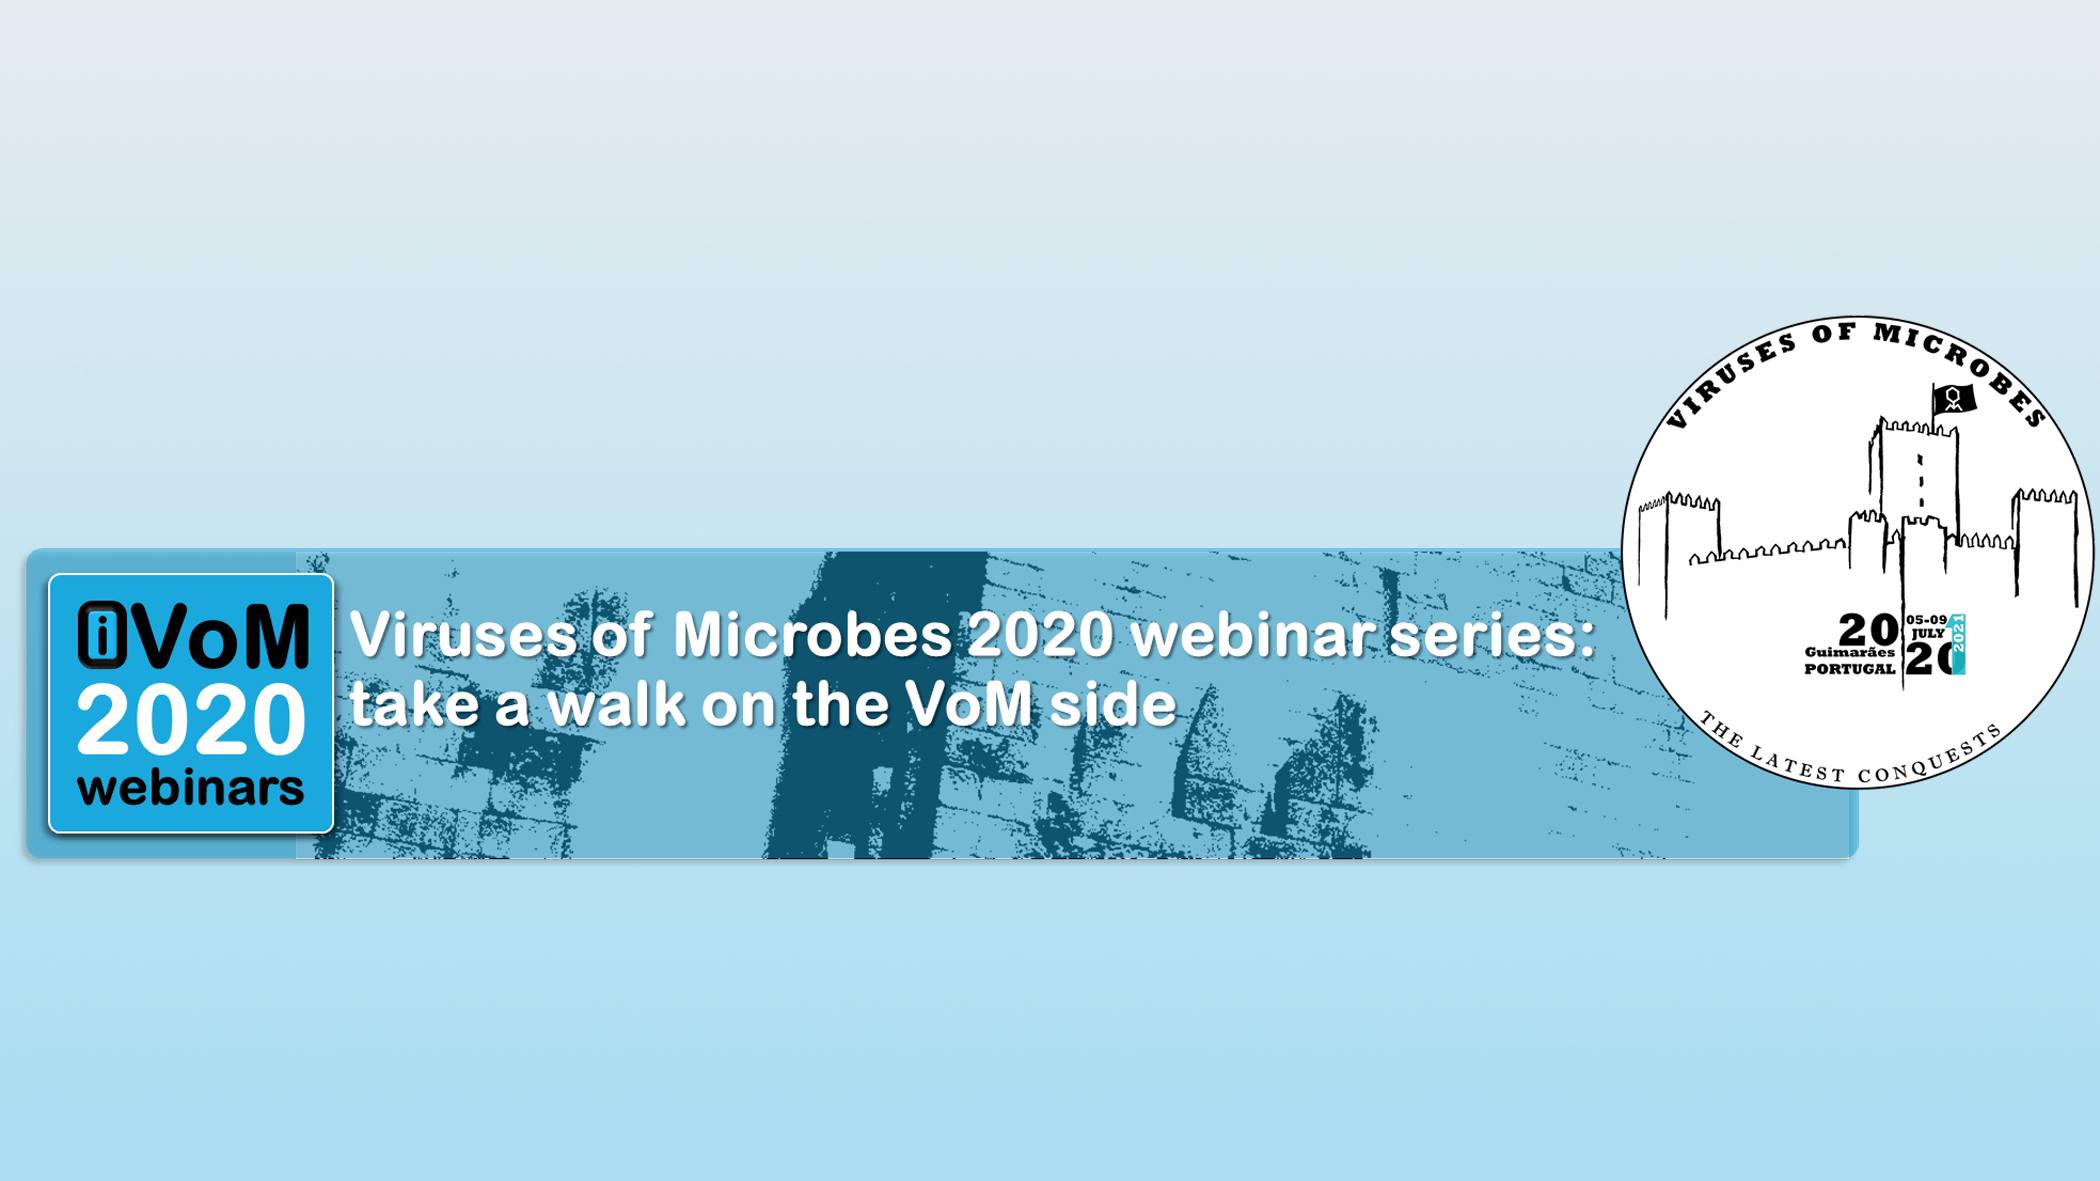 “Viruses of Microbes 2020 Webinar Series: Take a walk on the VoM side”